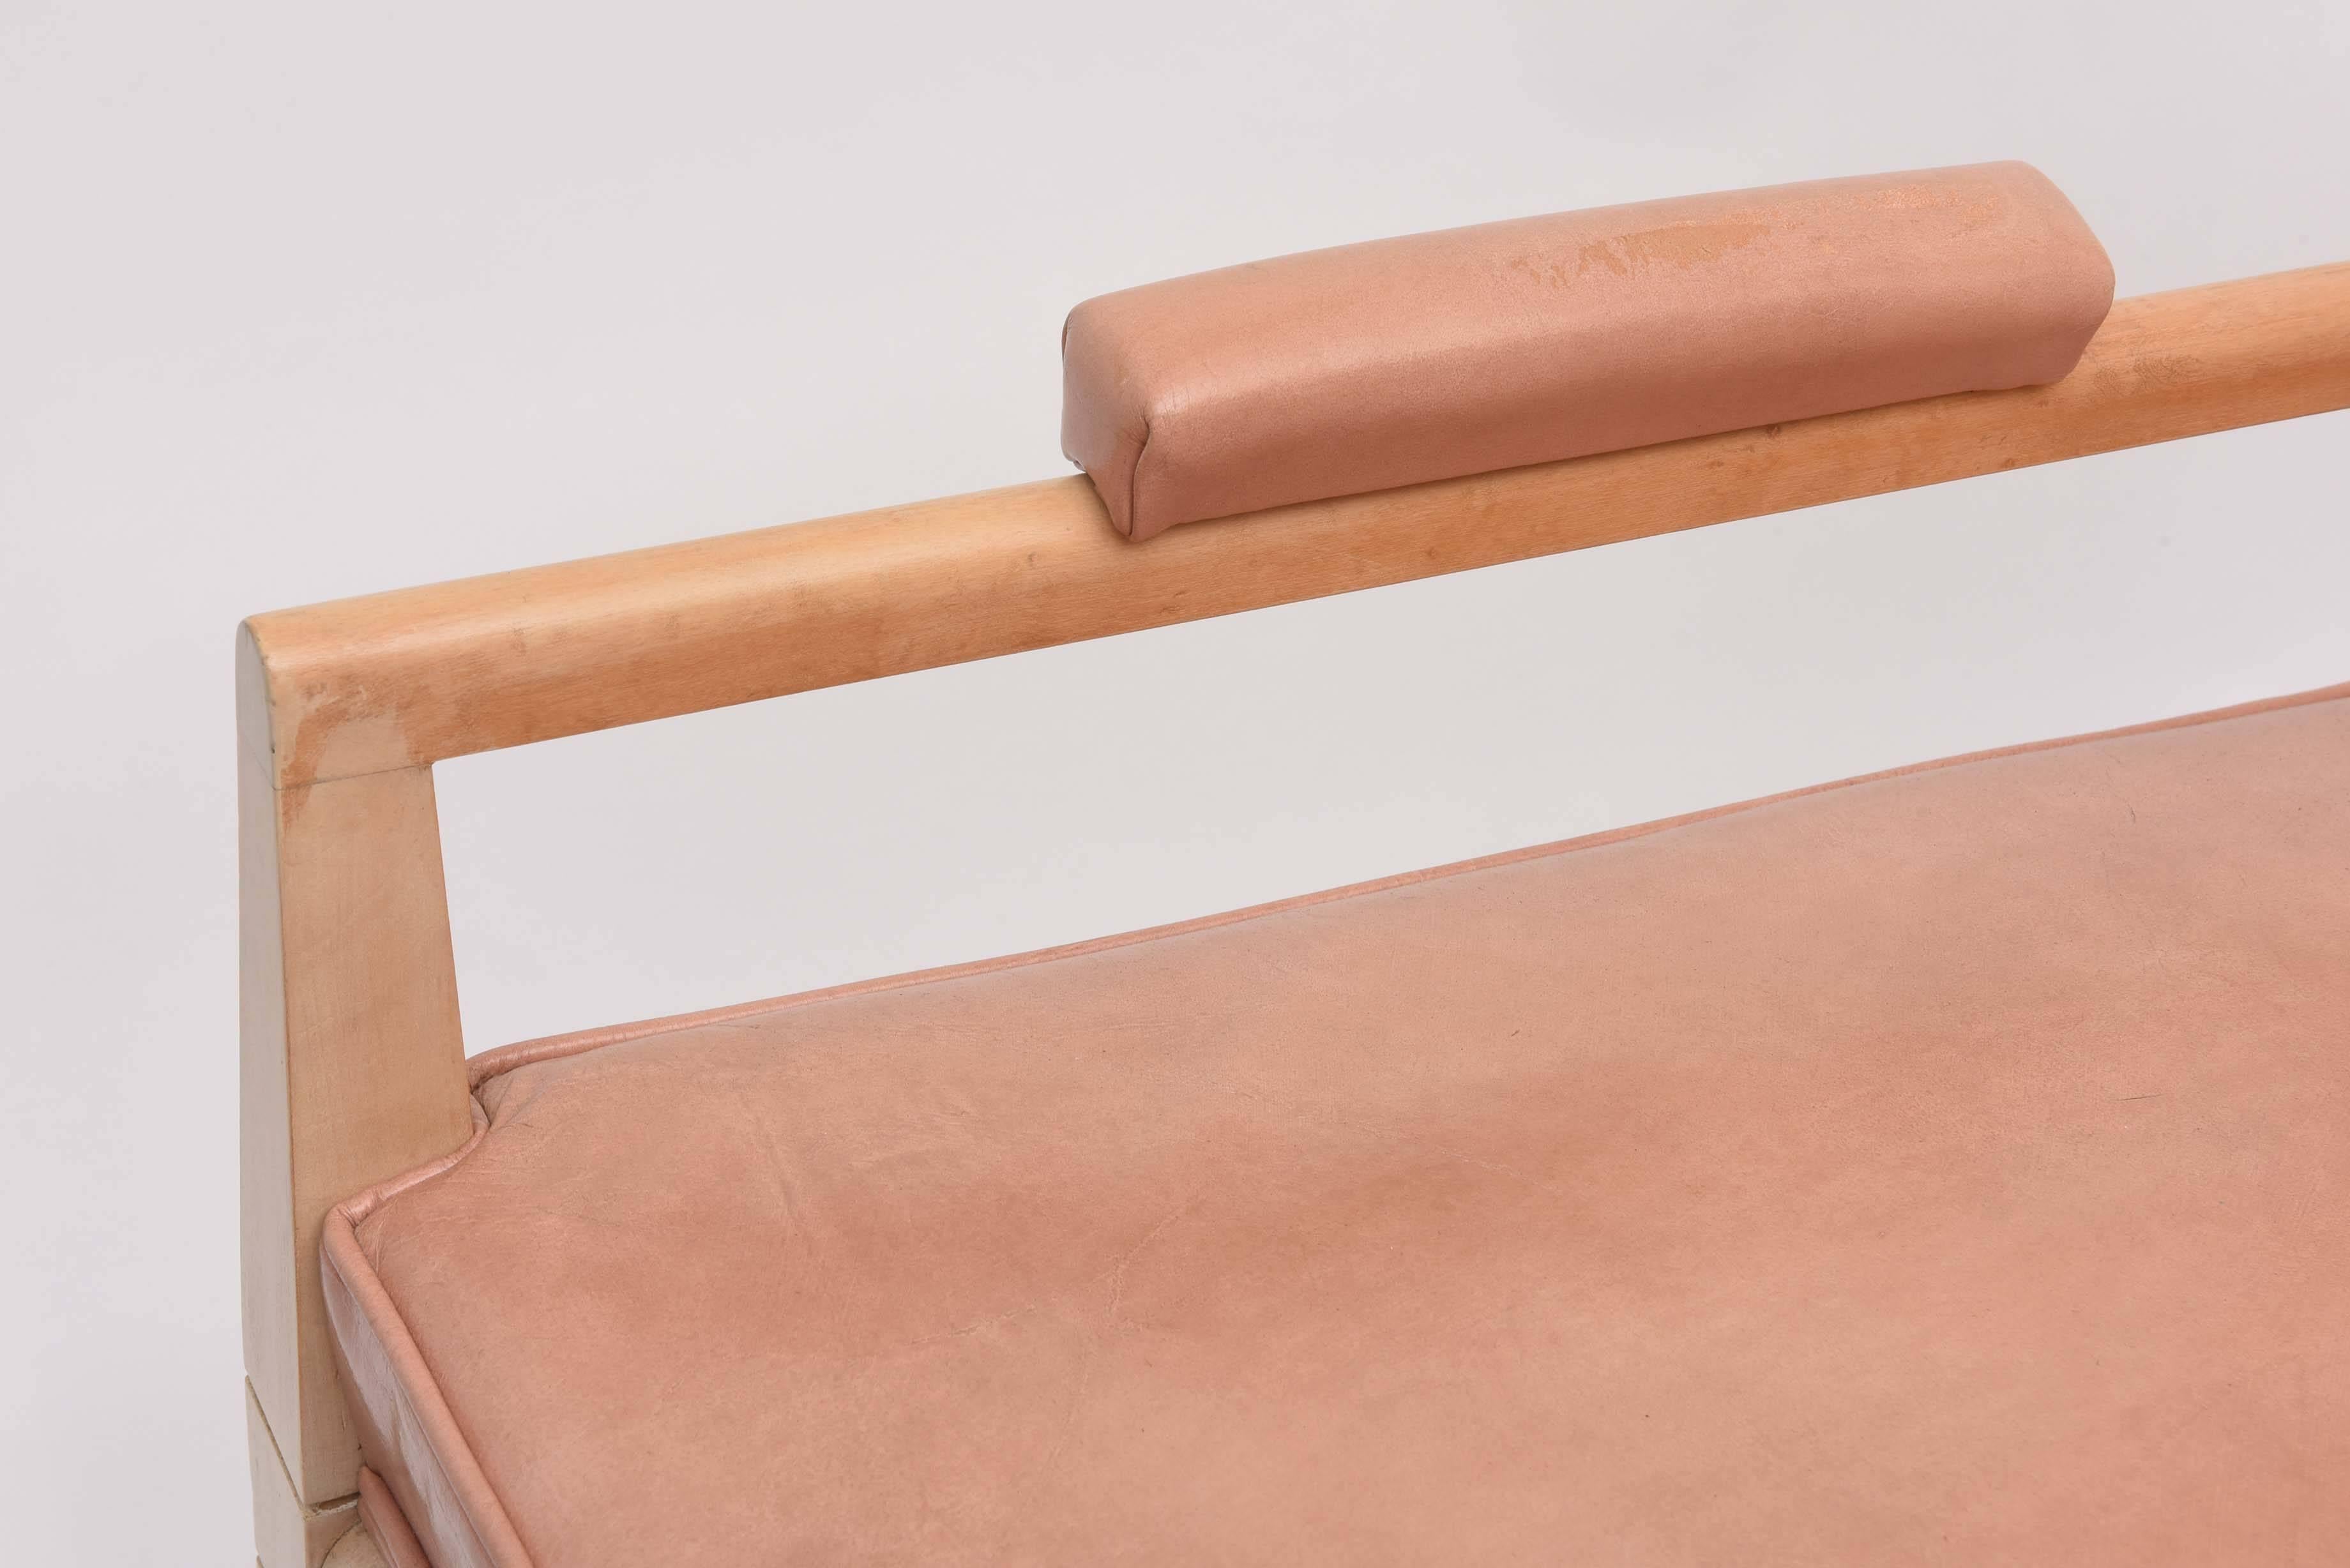 Leather Tommi Parzinger Slat Back Chairs